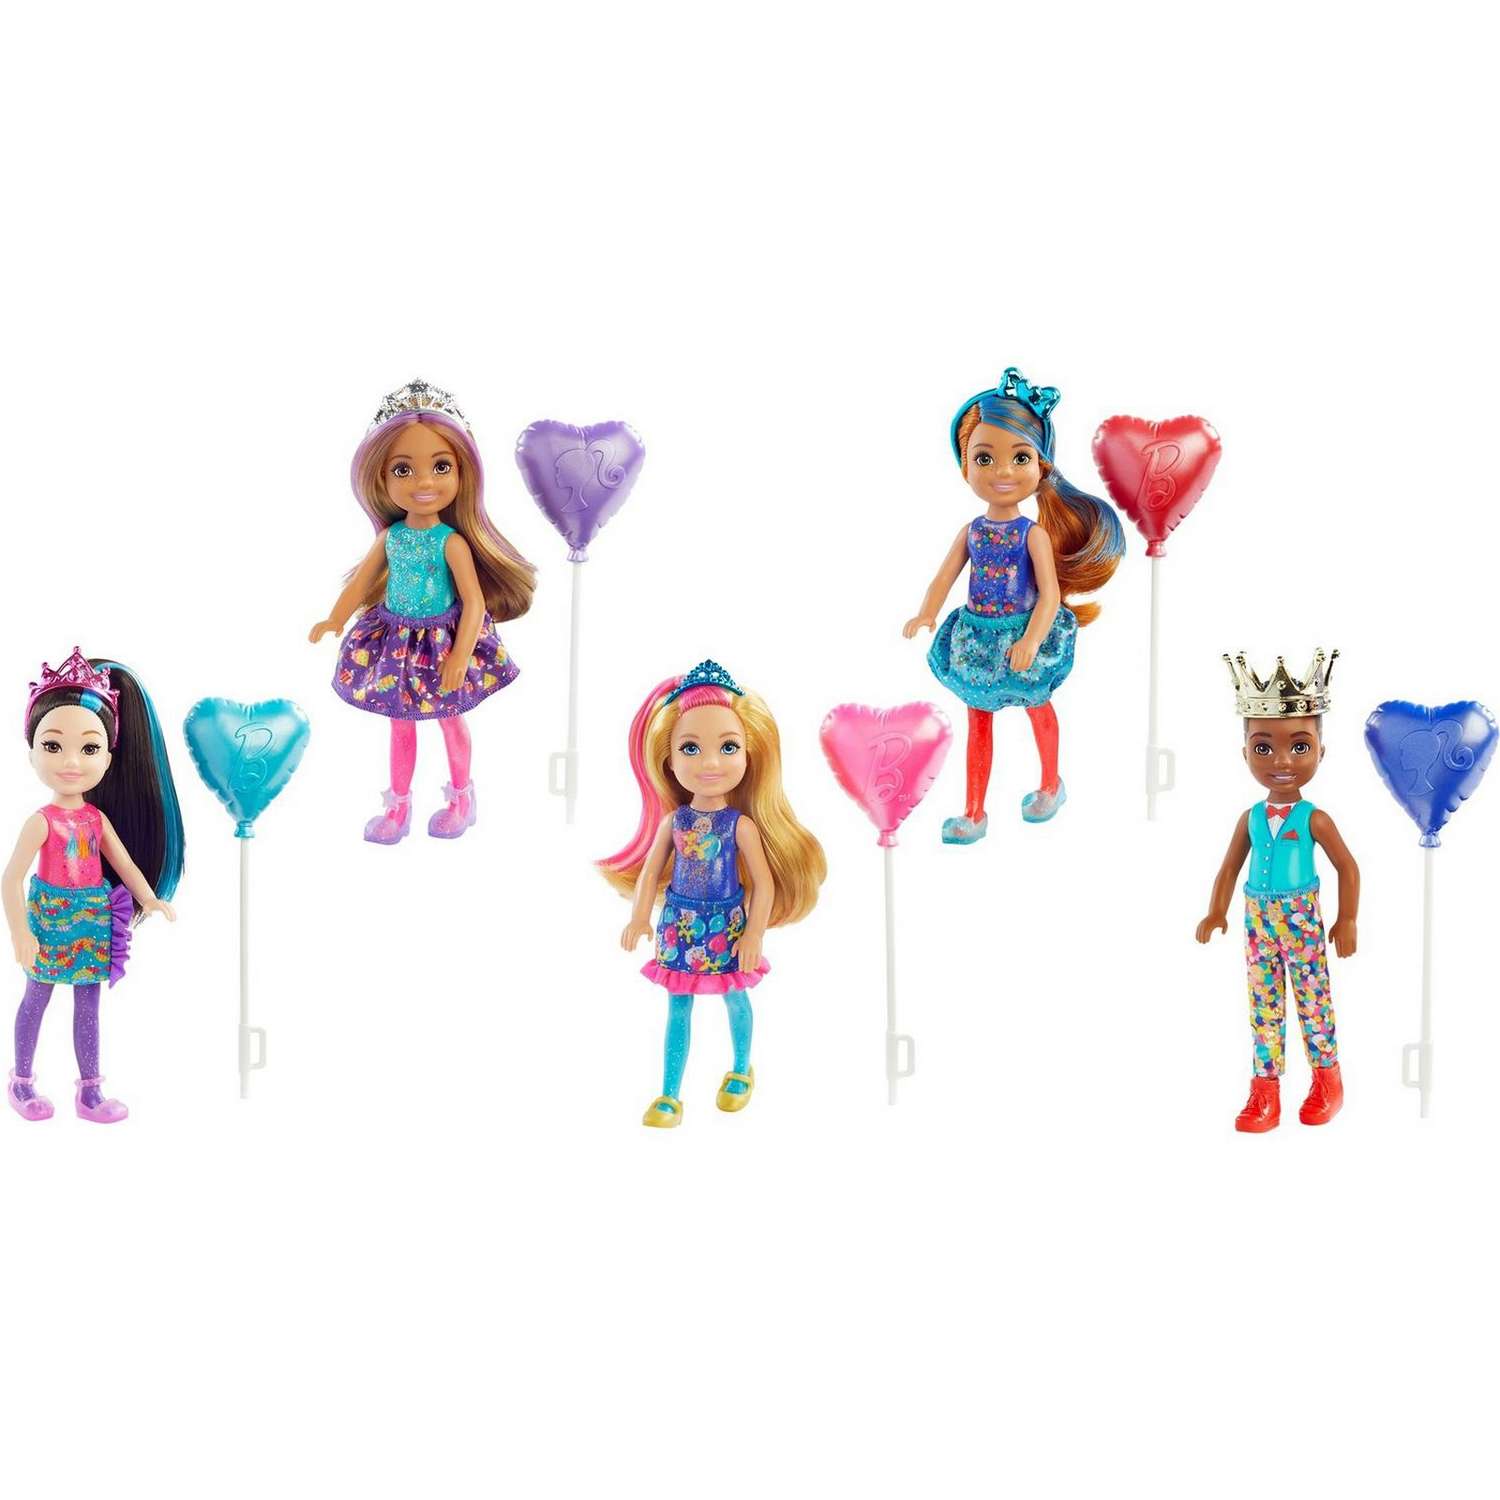 Кукла Barbie Челси в ярких нарядах для вечеринки в непрозрачной упаковке (Сюрприз) GTT26 GTT26 - фото 4